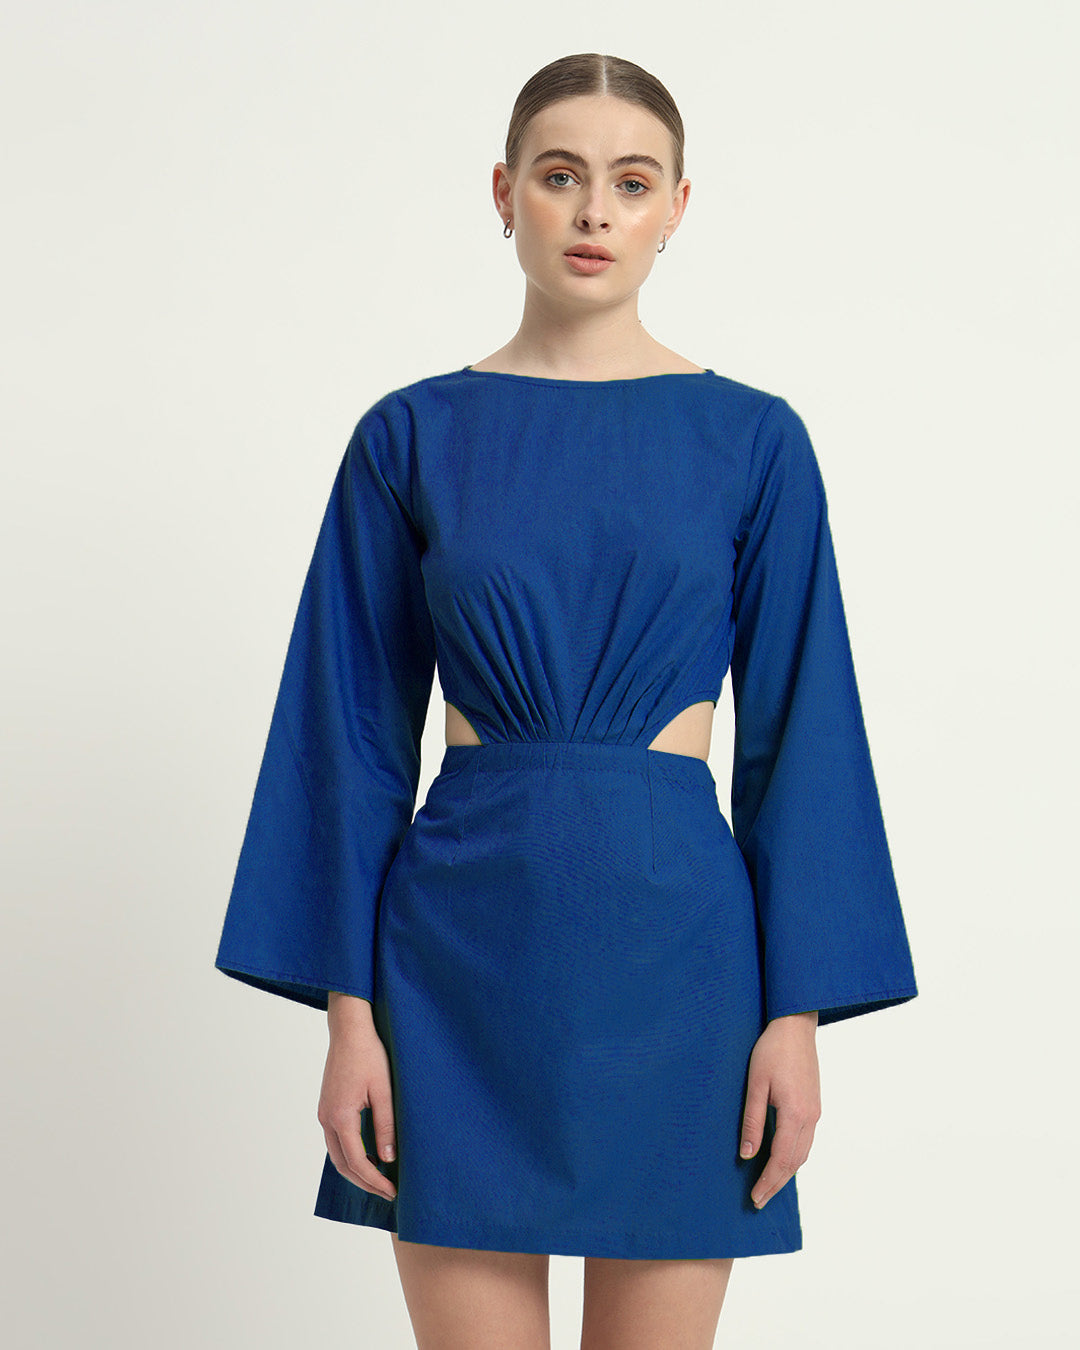 The Cobalt Eloy Cotton Dress